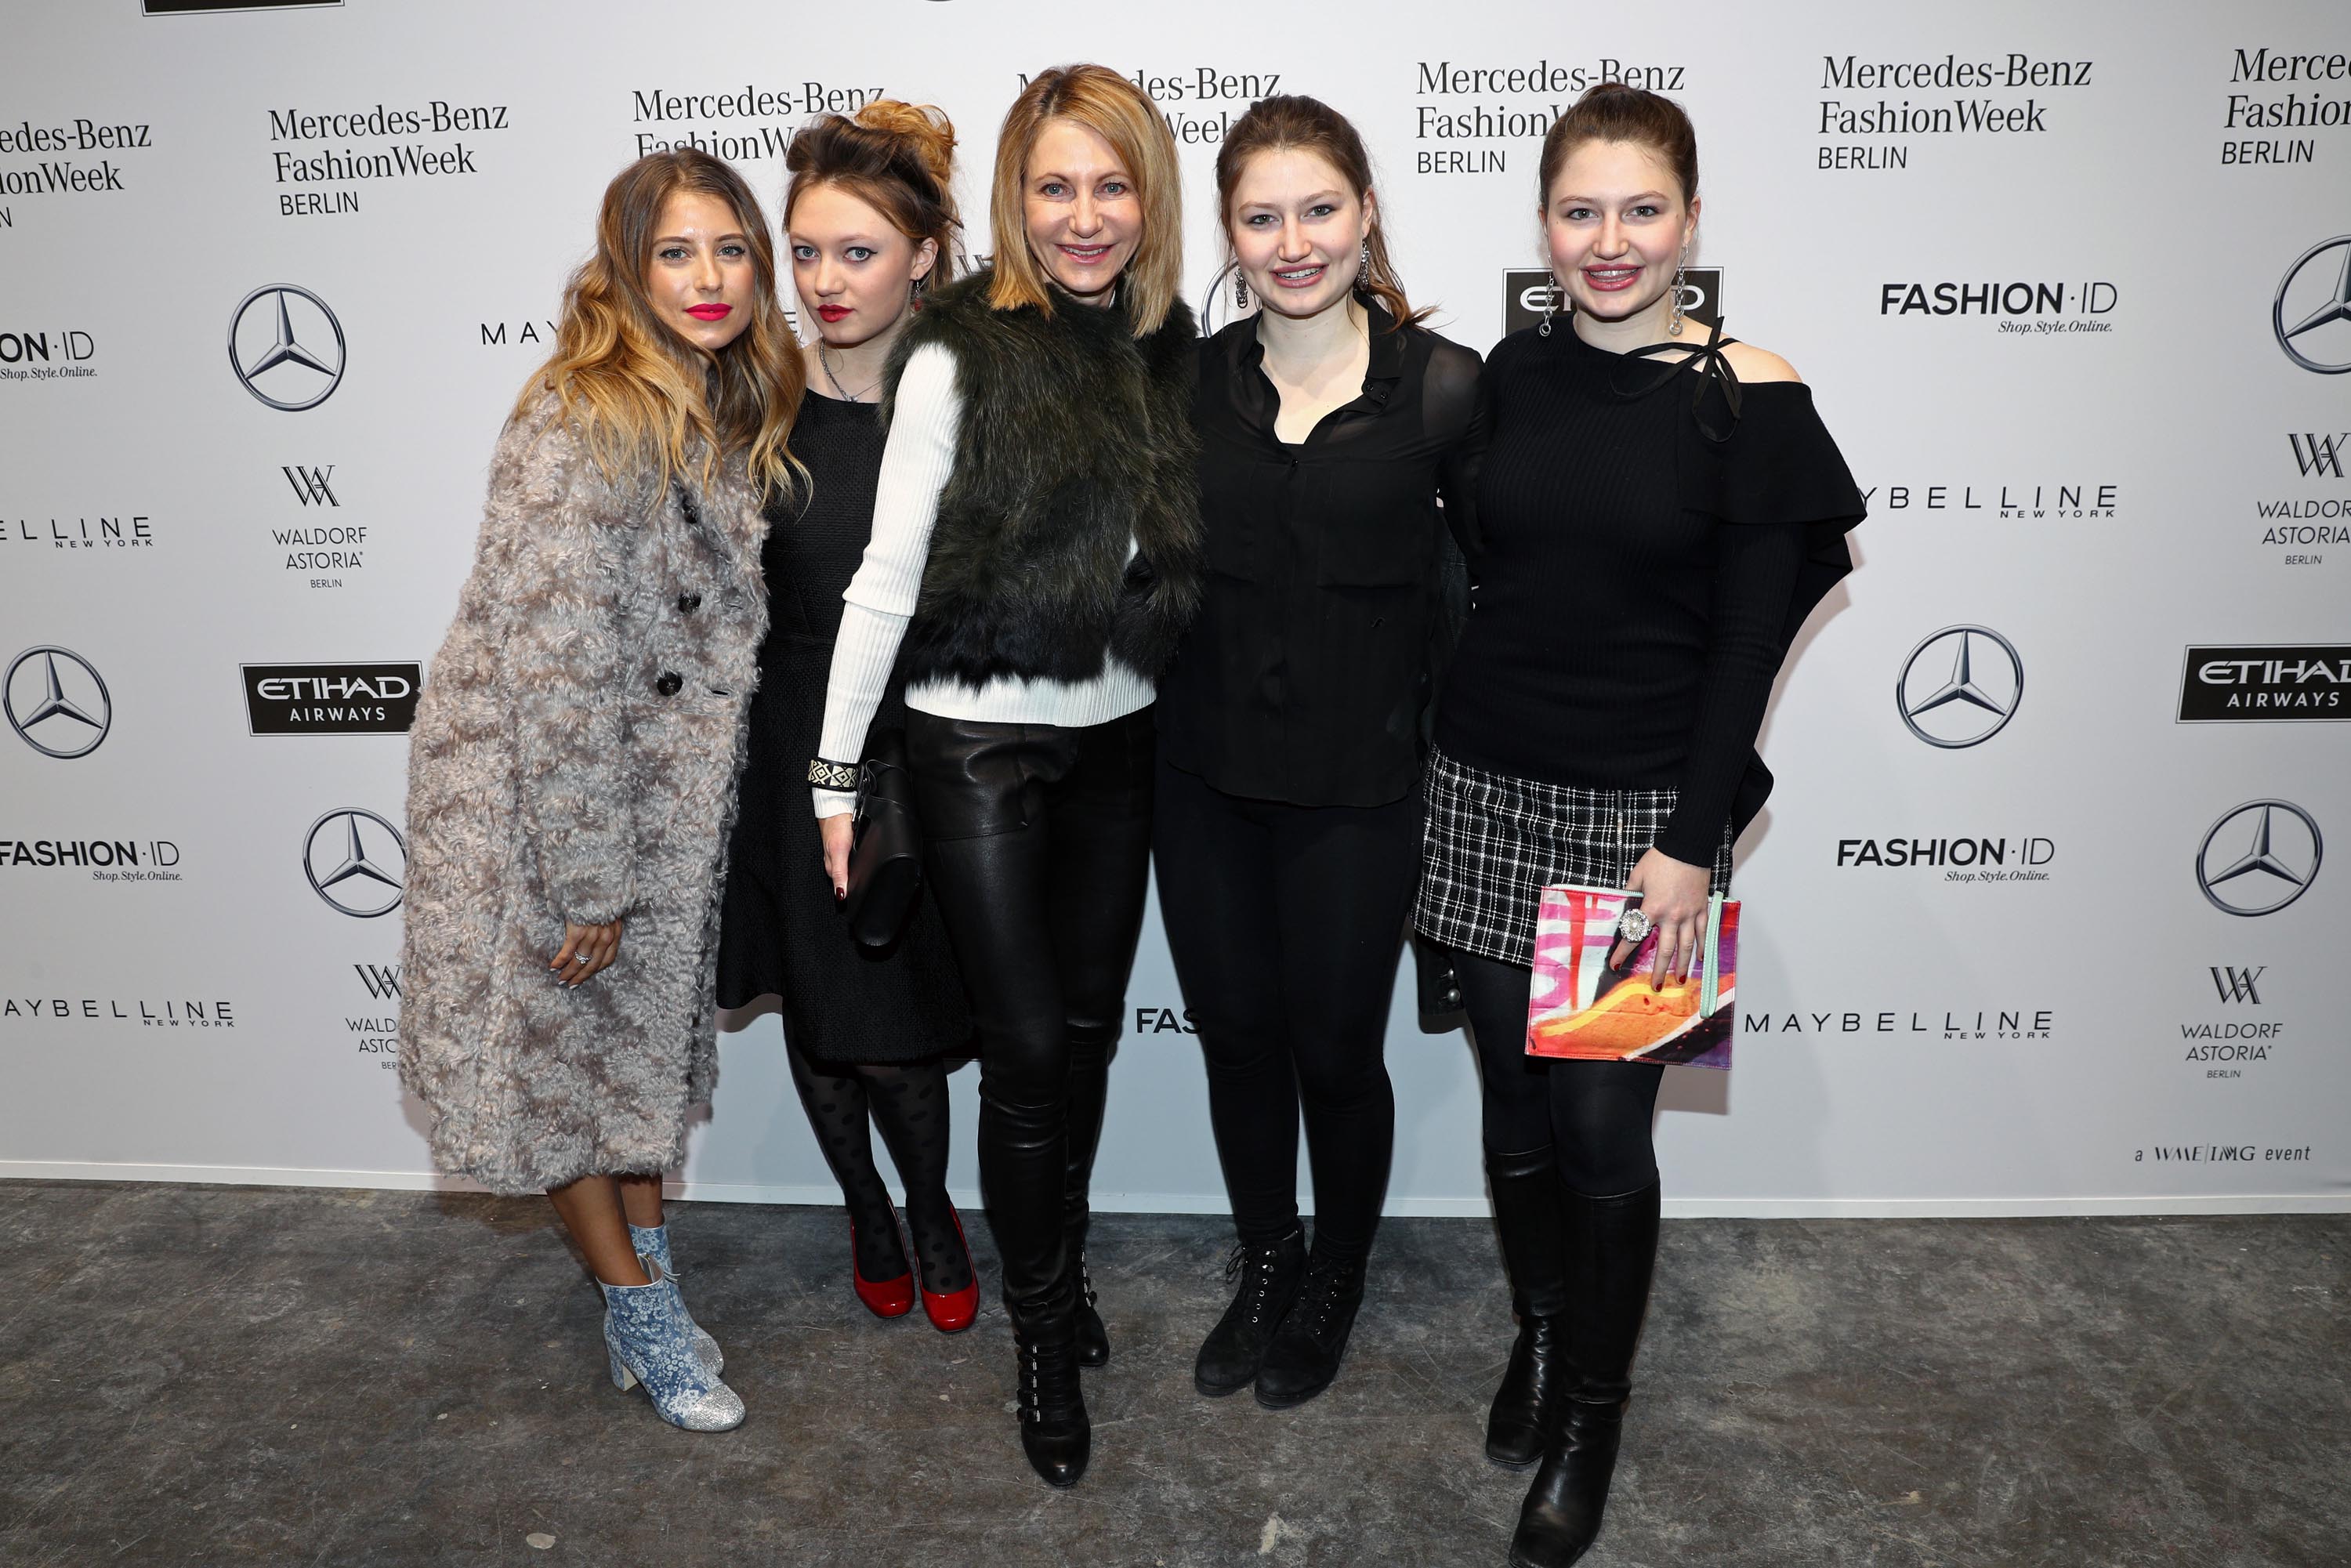 Kimberly Emerson attends the Mercedes-Benz Fashion Week Berlin